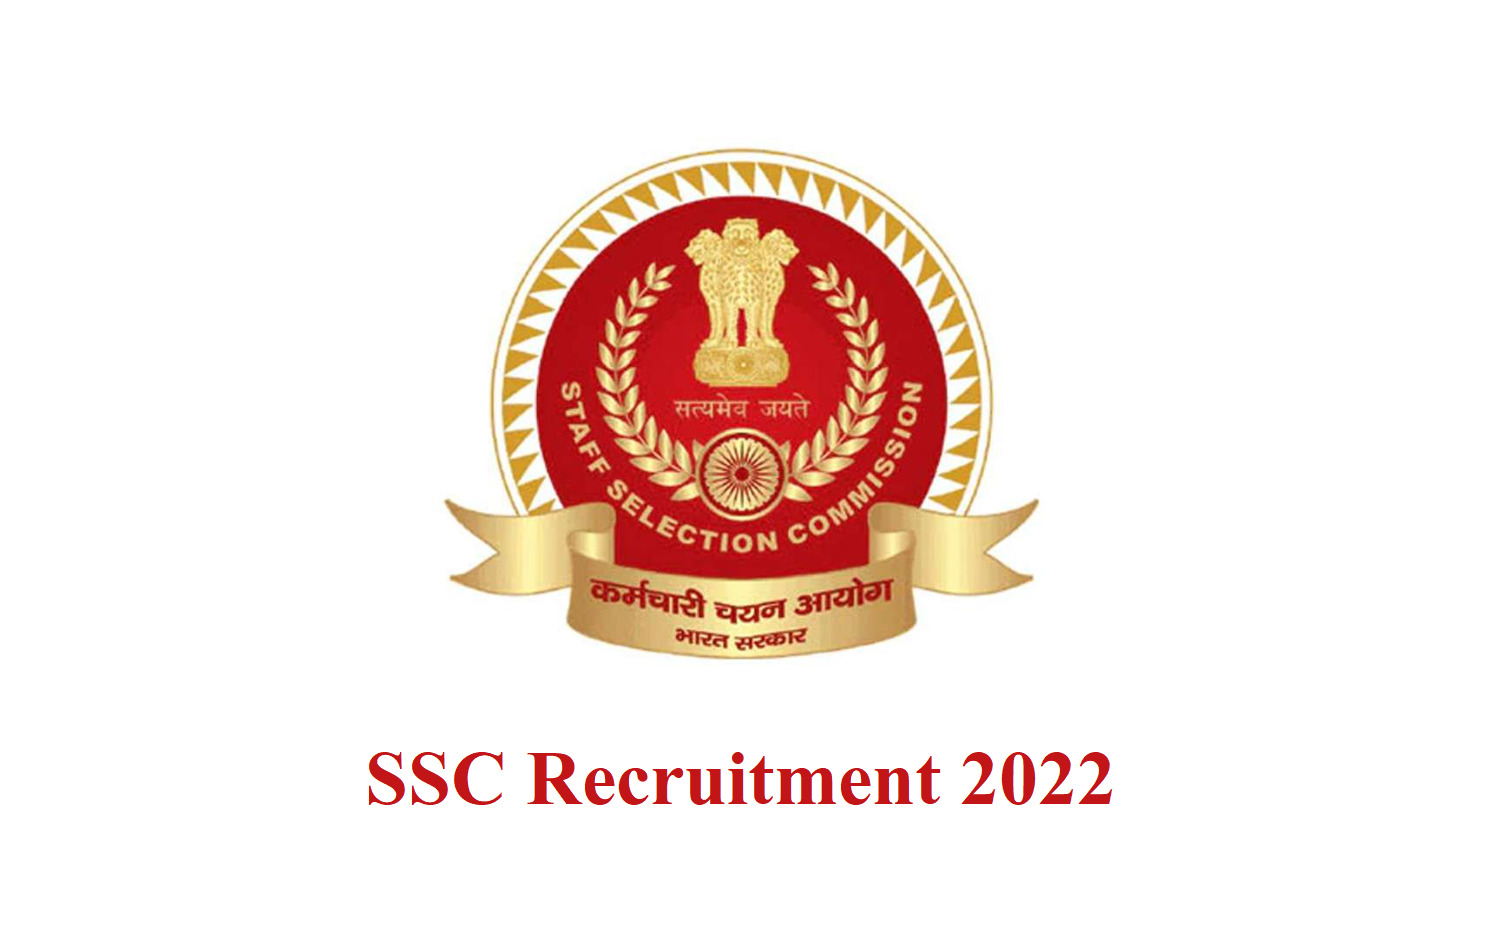 Sarkari Naukri: Recruitment for the posts of SSC Junior Engineer, salary in lakhs